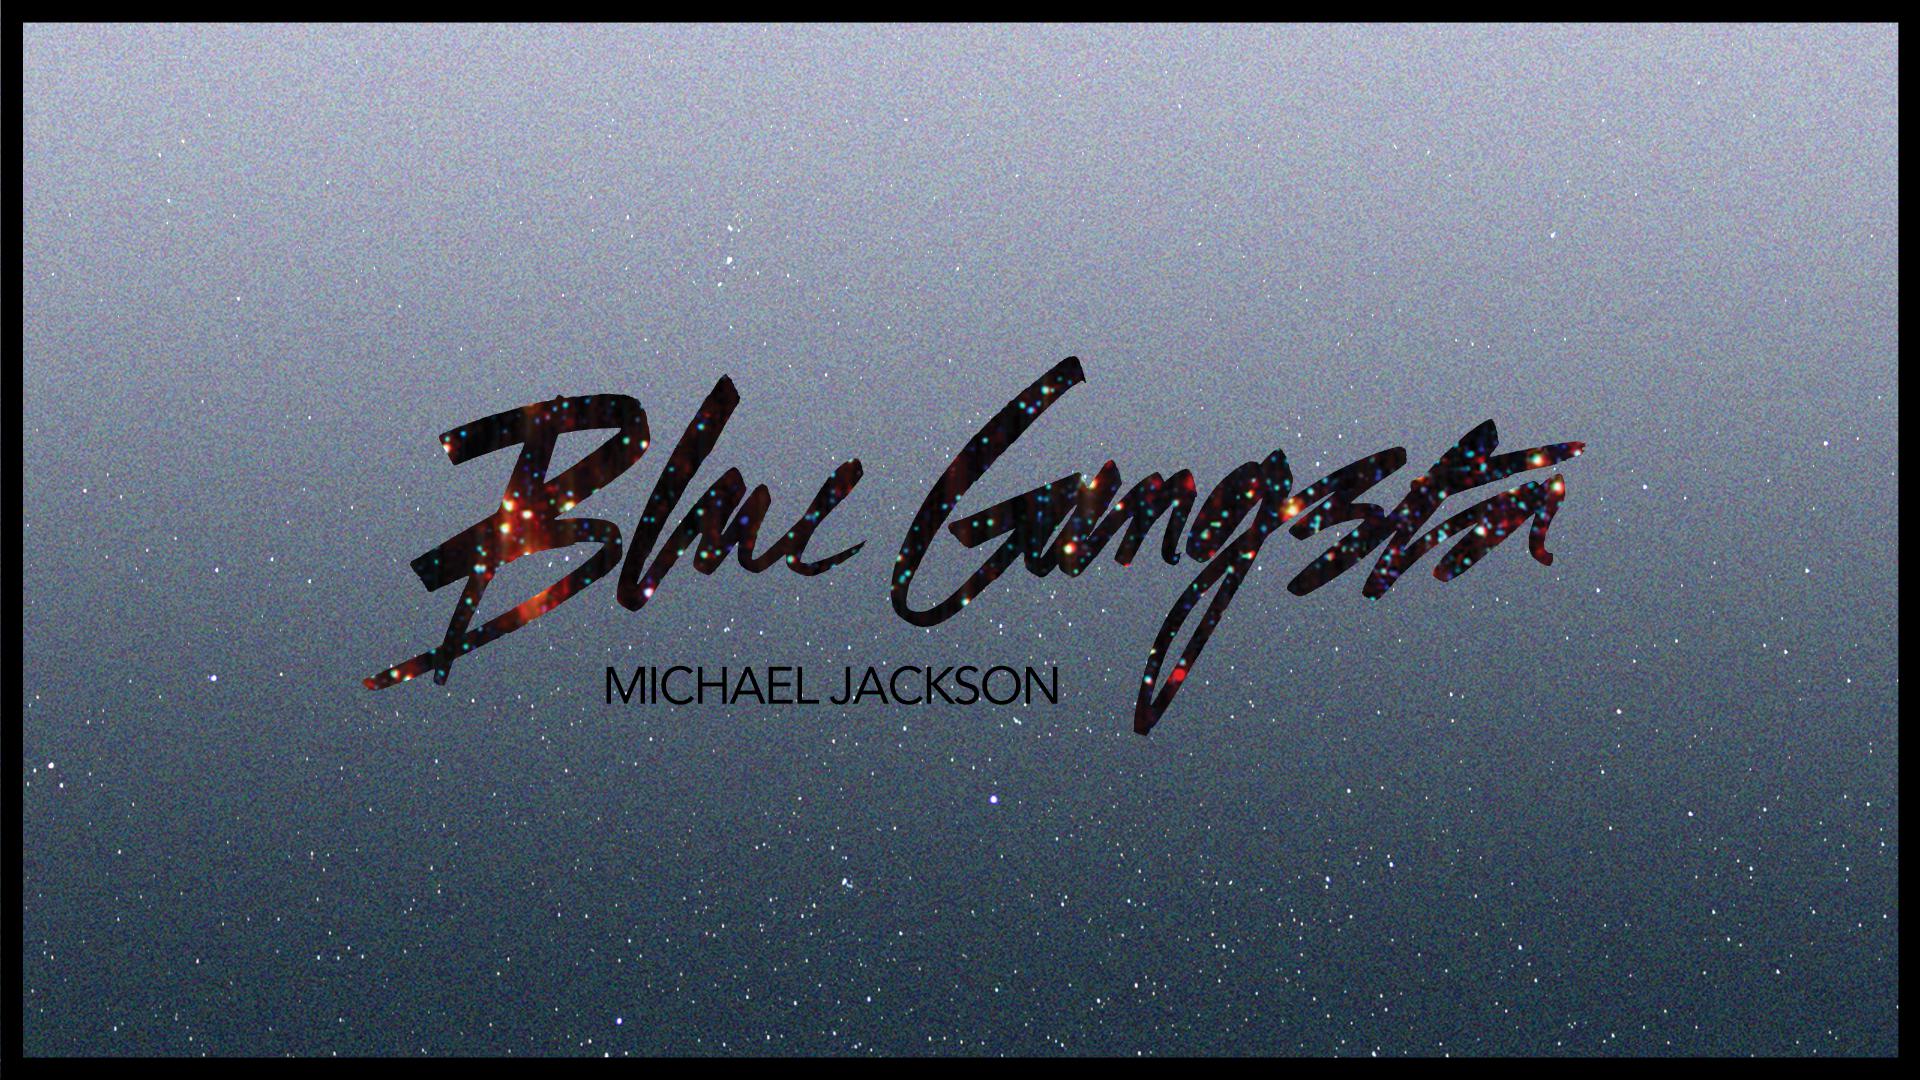 Michael Jackson - Blue Gangsta (Audio)